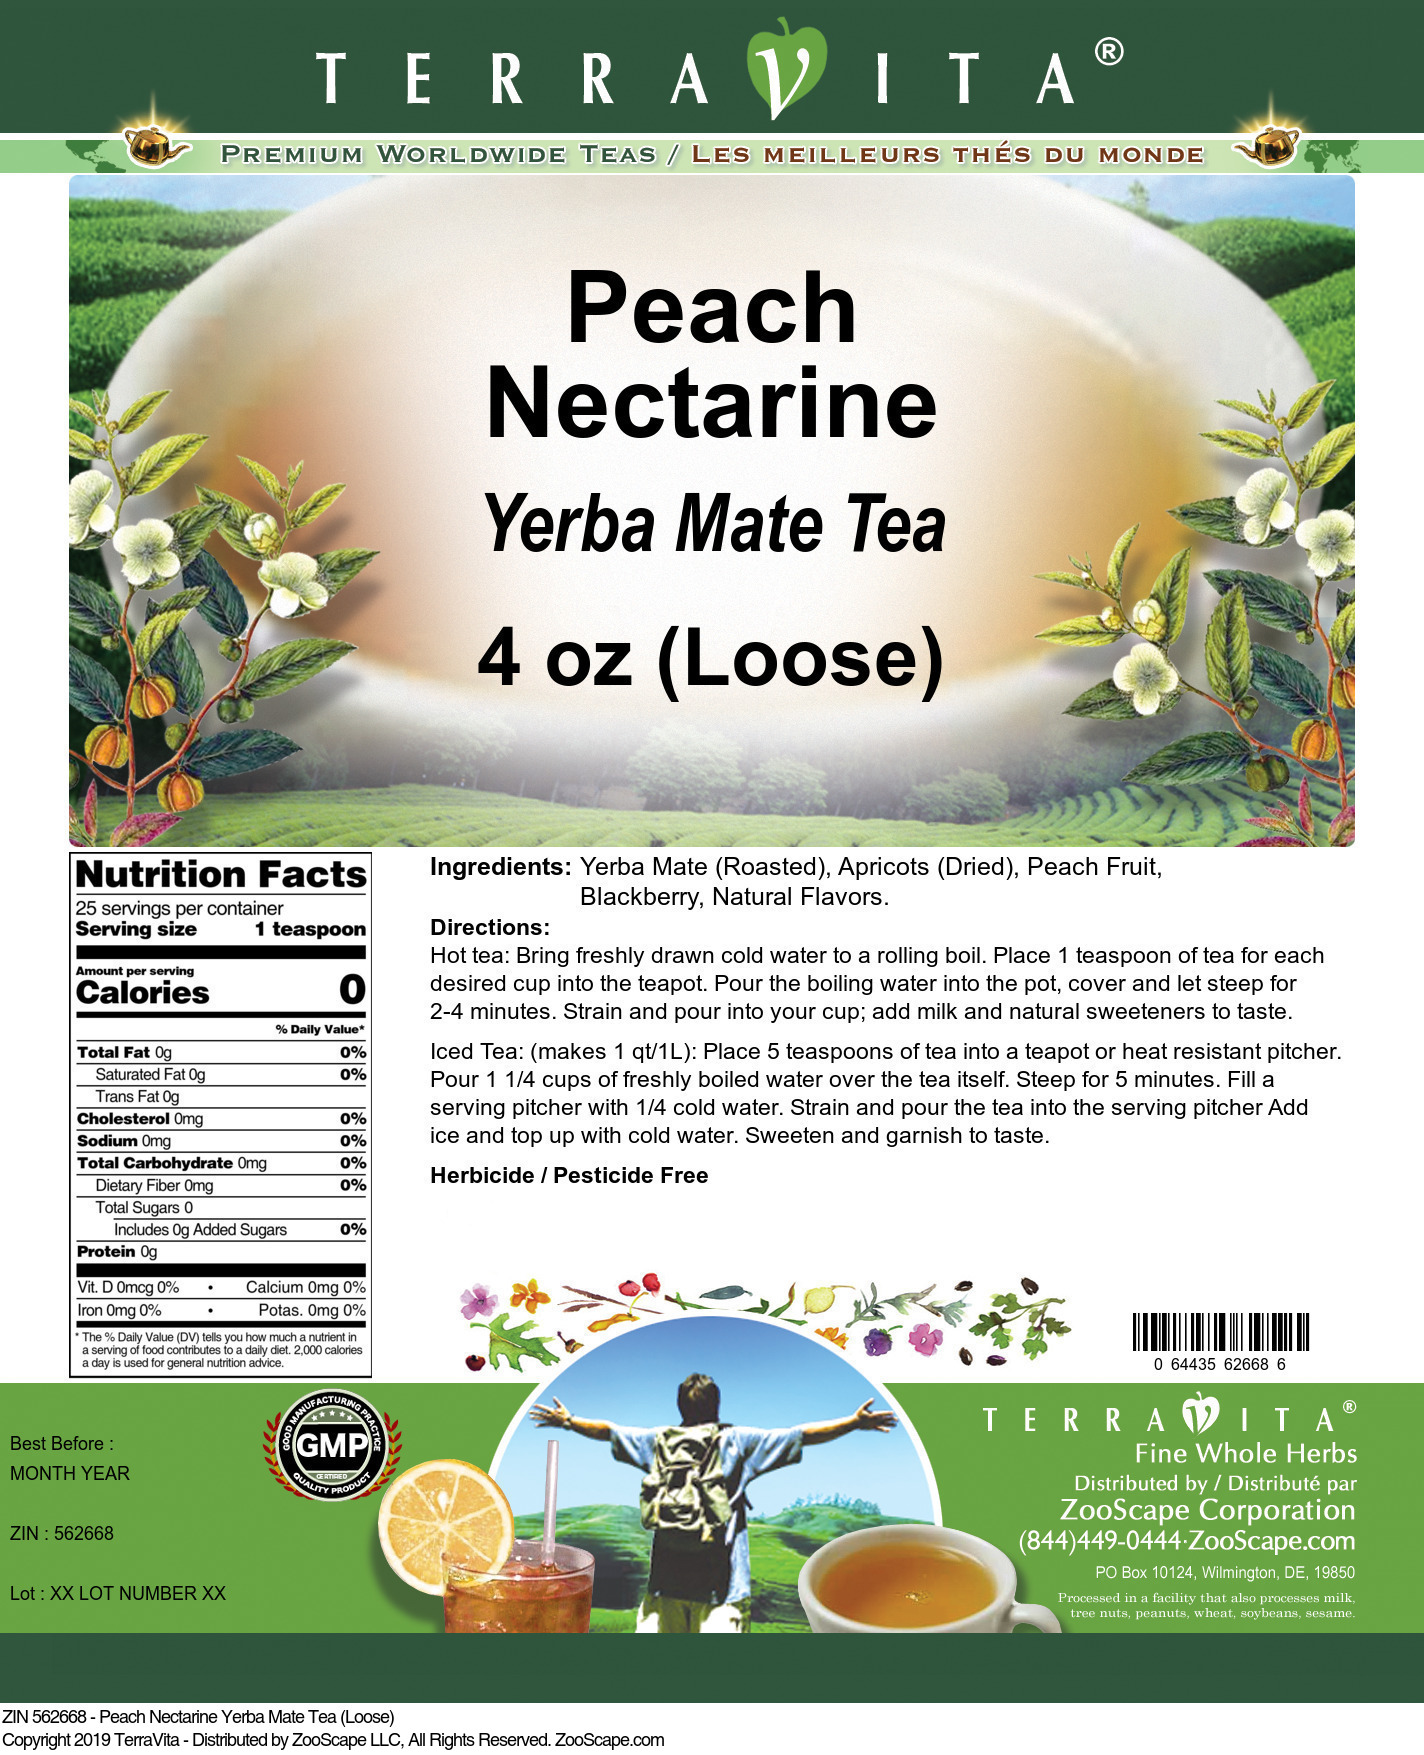 Peach Nectarine Yerba Mate Tea (Loose) - Label